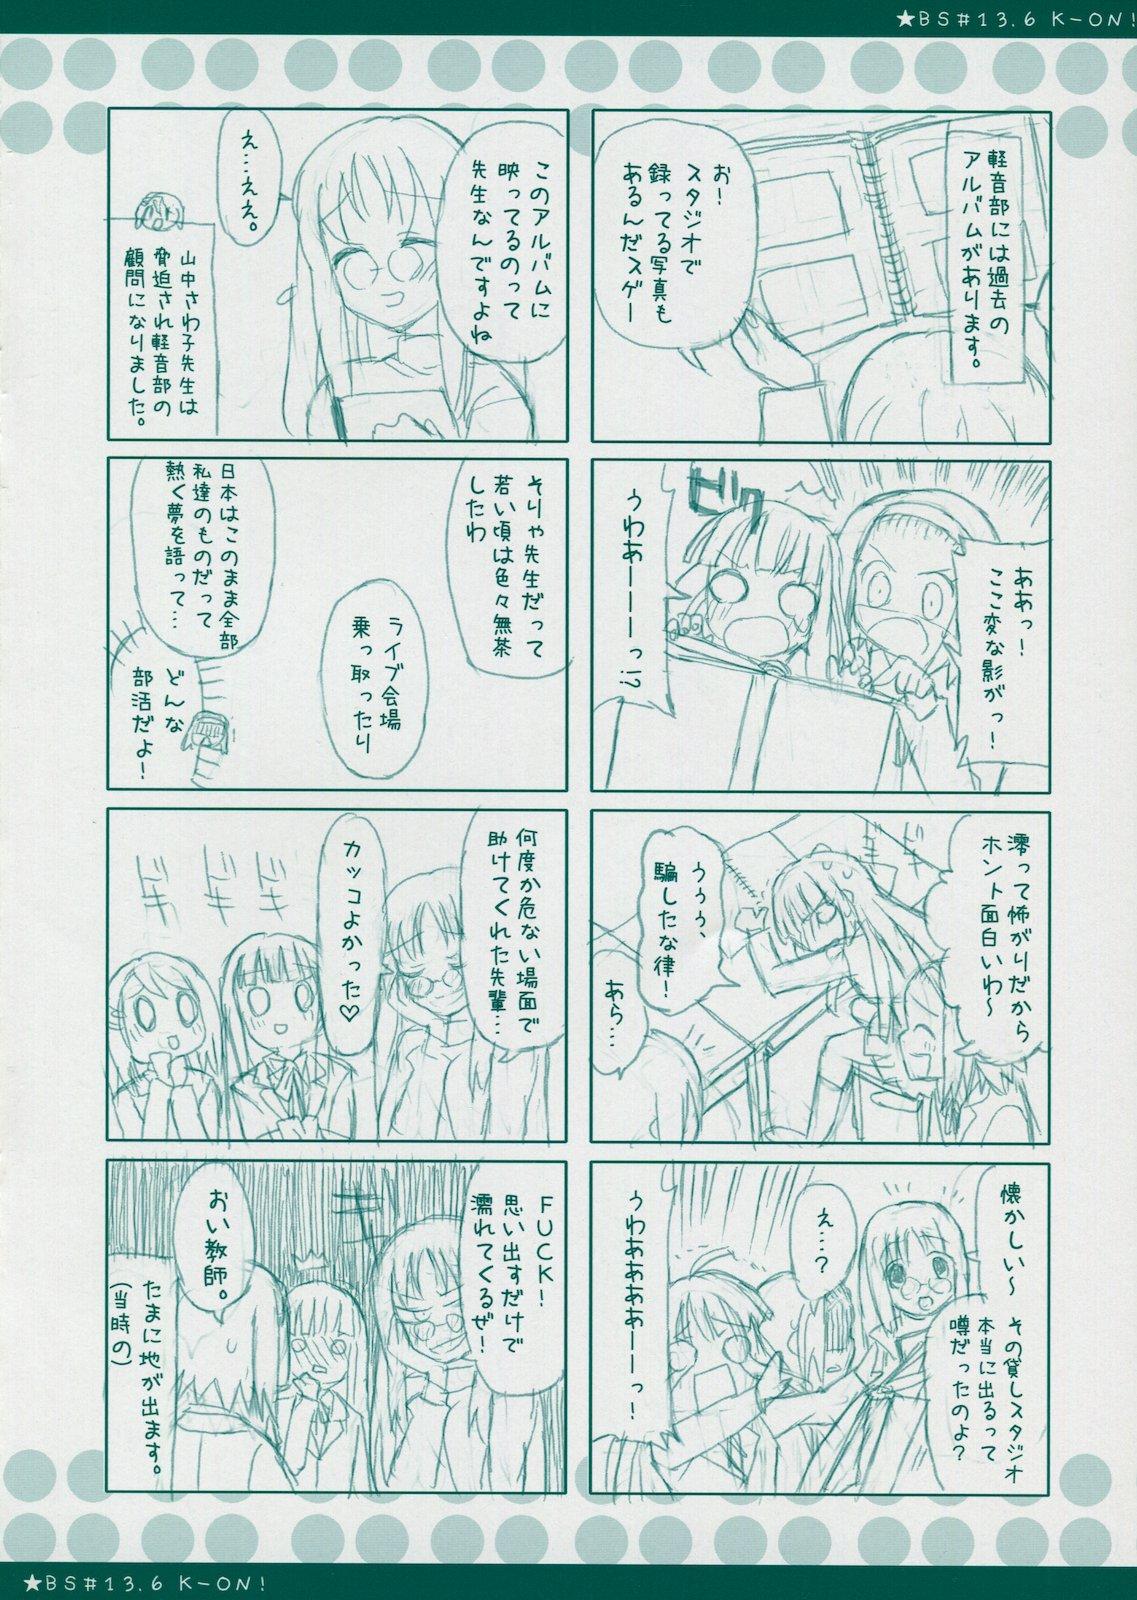 Verga BS#13.9 Keion no Rakugaki Bon 2 - K-on Coed - Page 10